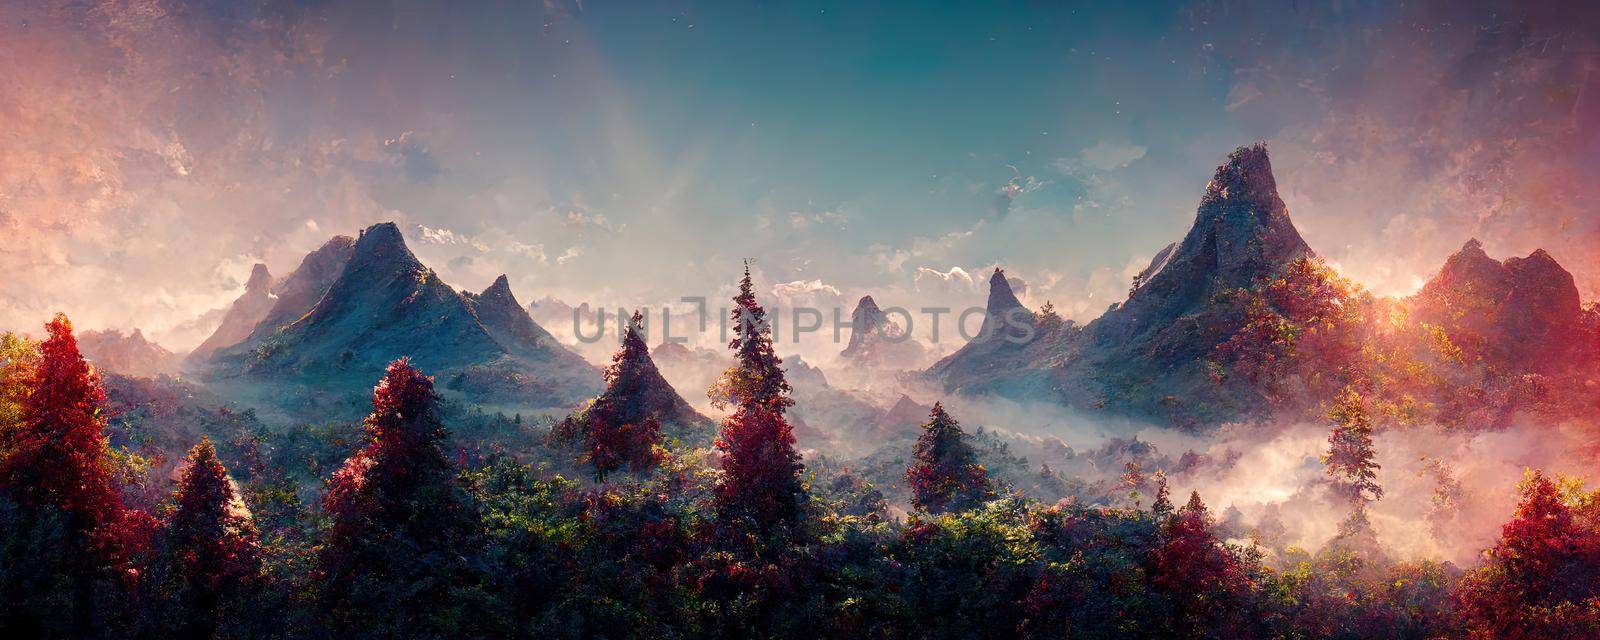 Magic fairy tale landscape of mountains in lilac fog.